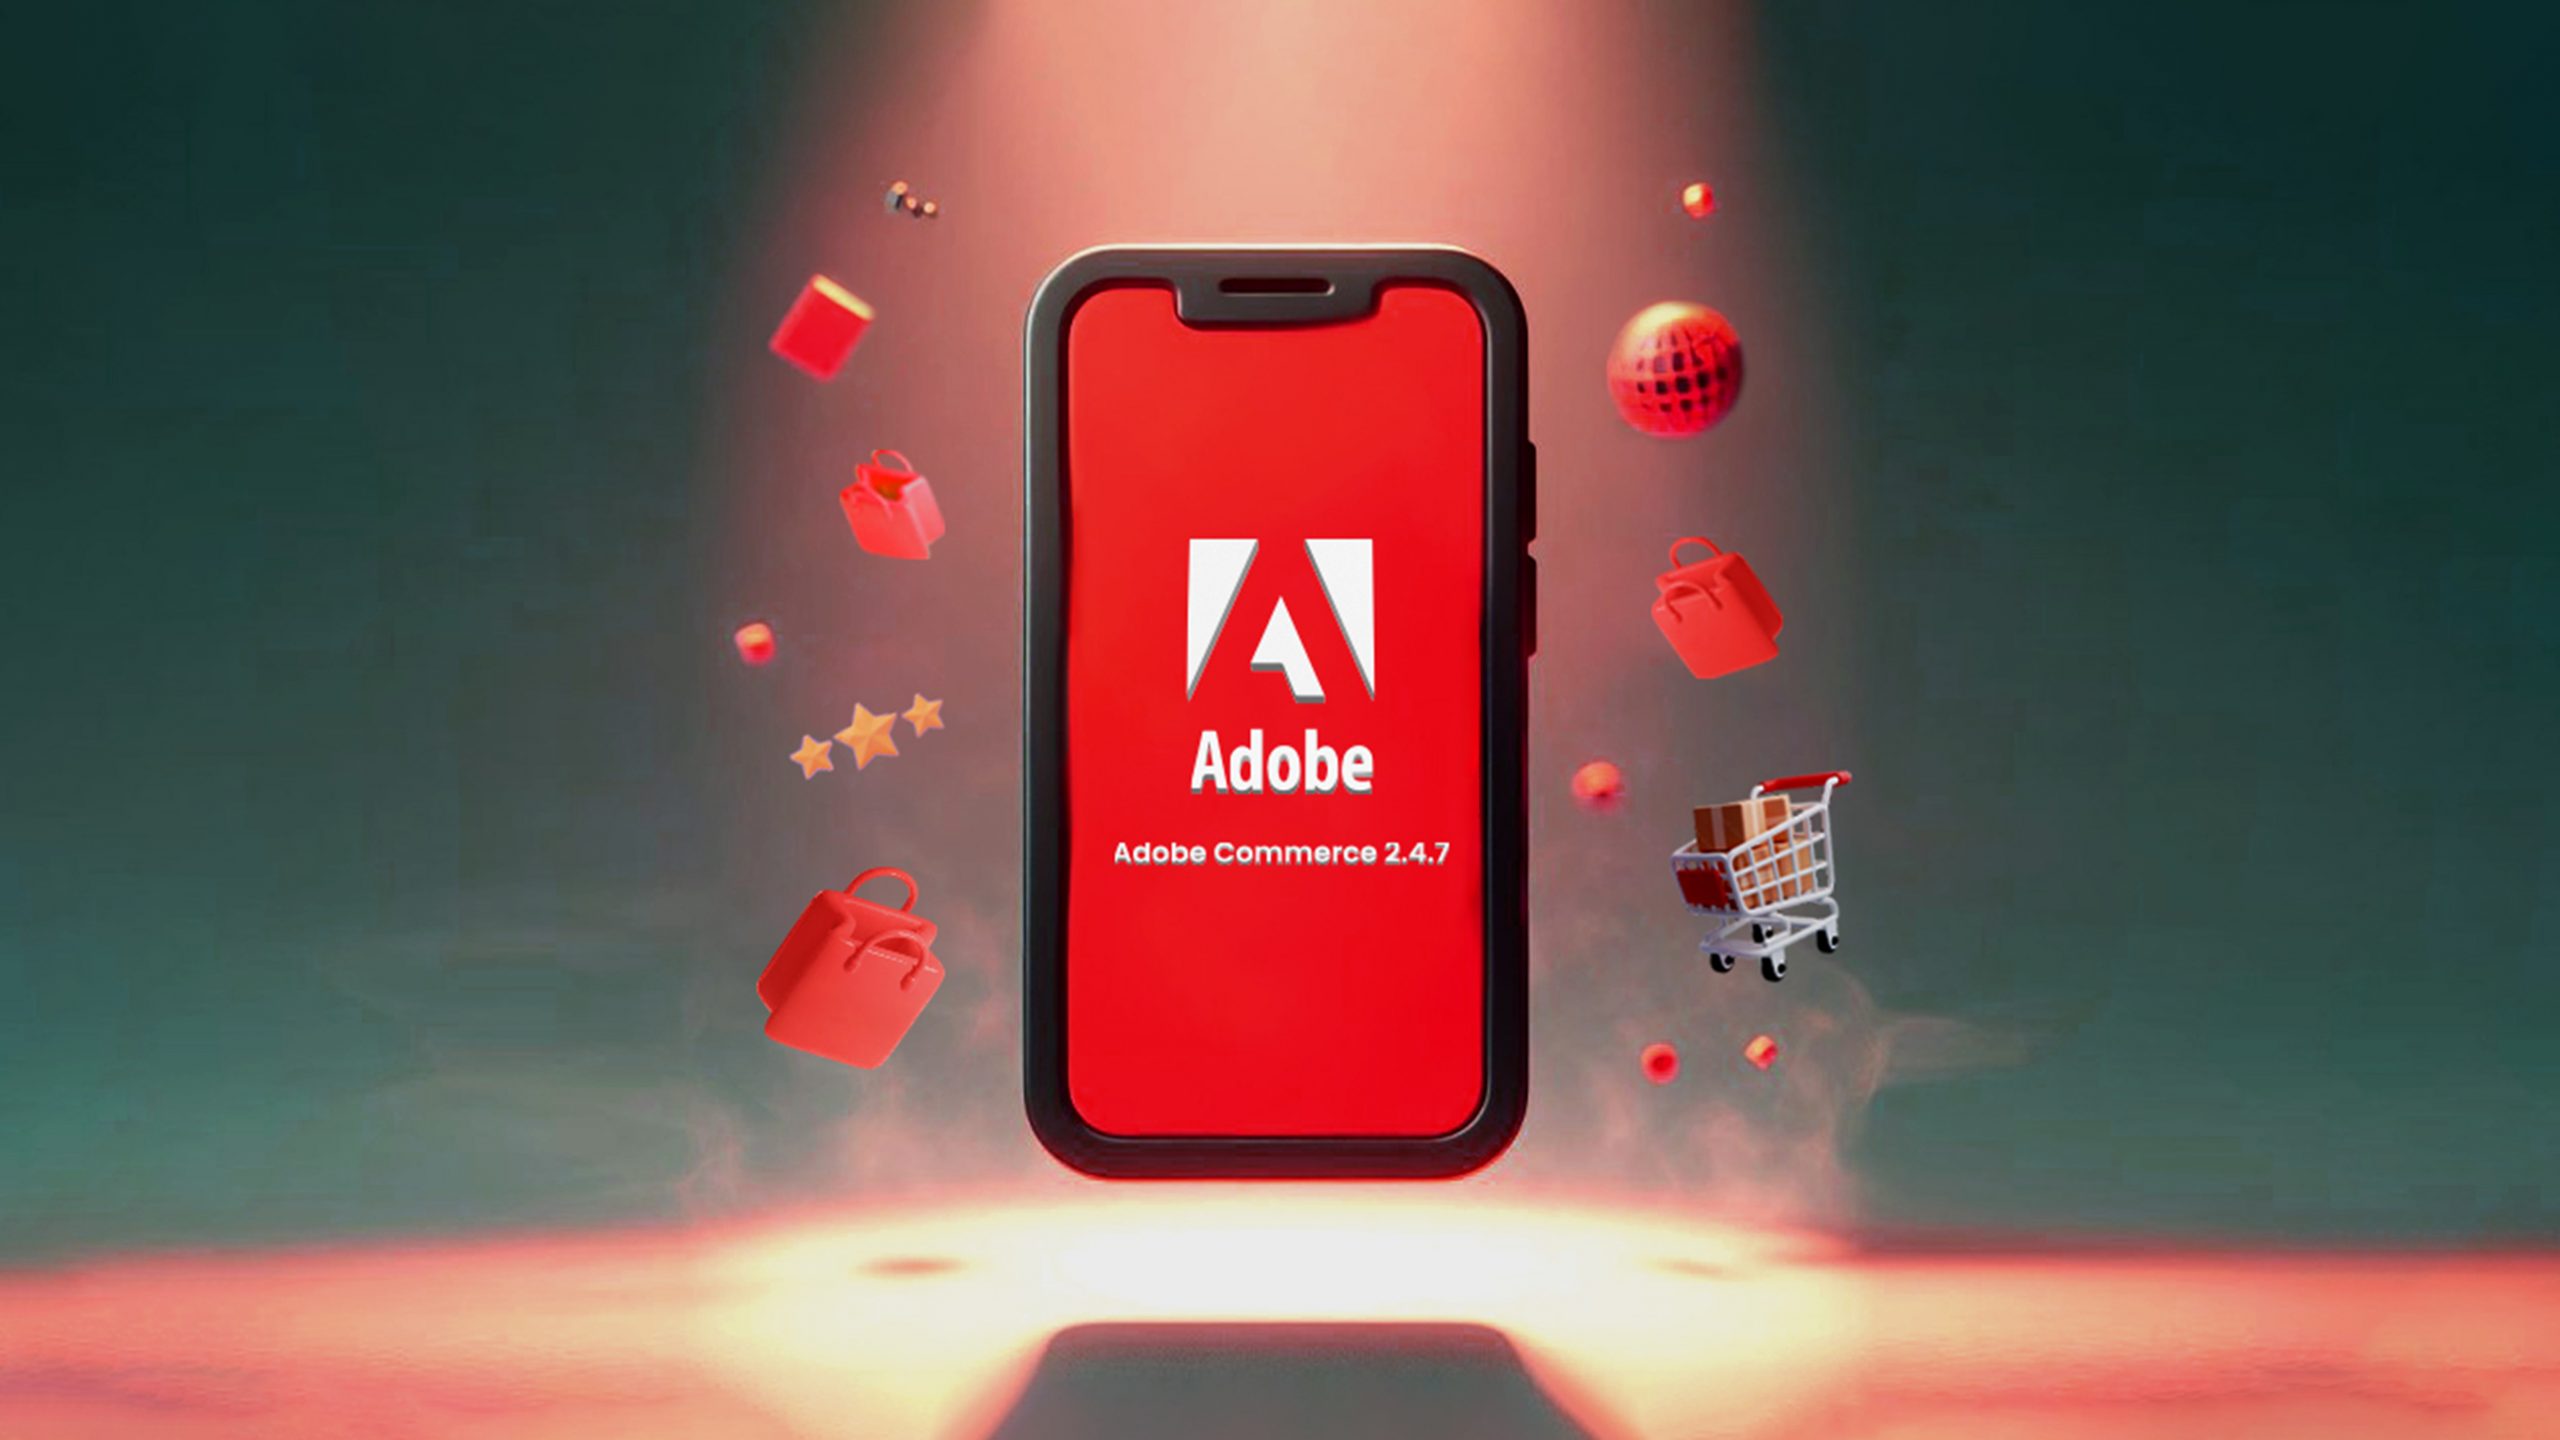 Adobe commerce 2.4.7